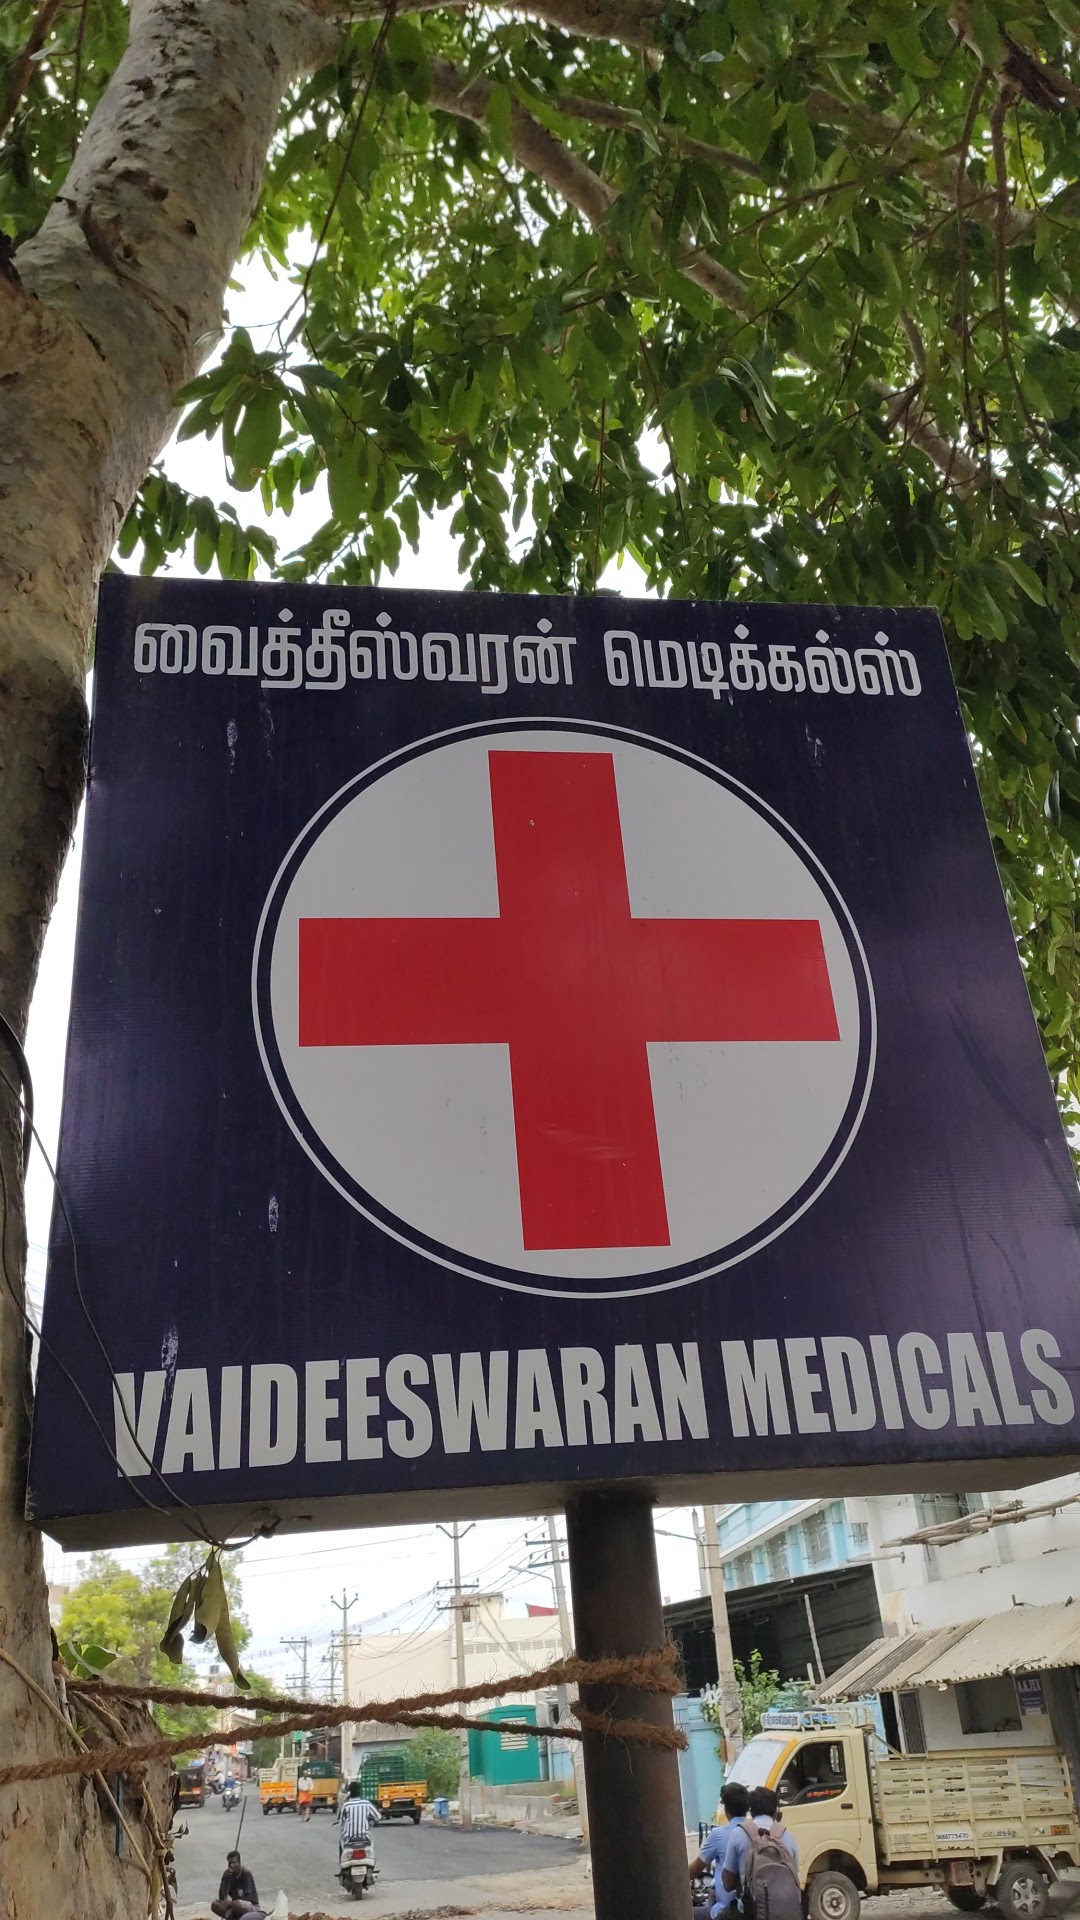 Vaideeswaran medicals